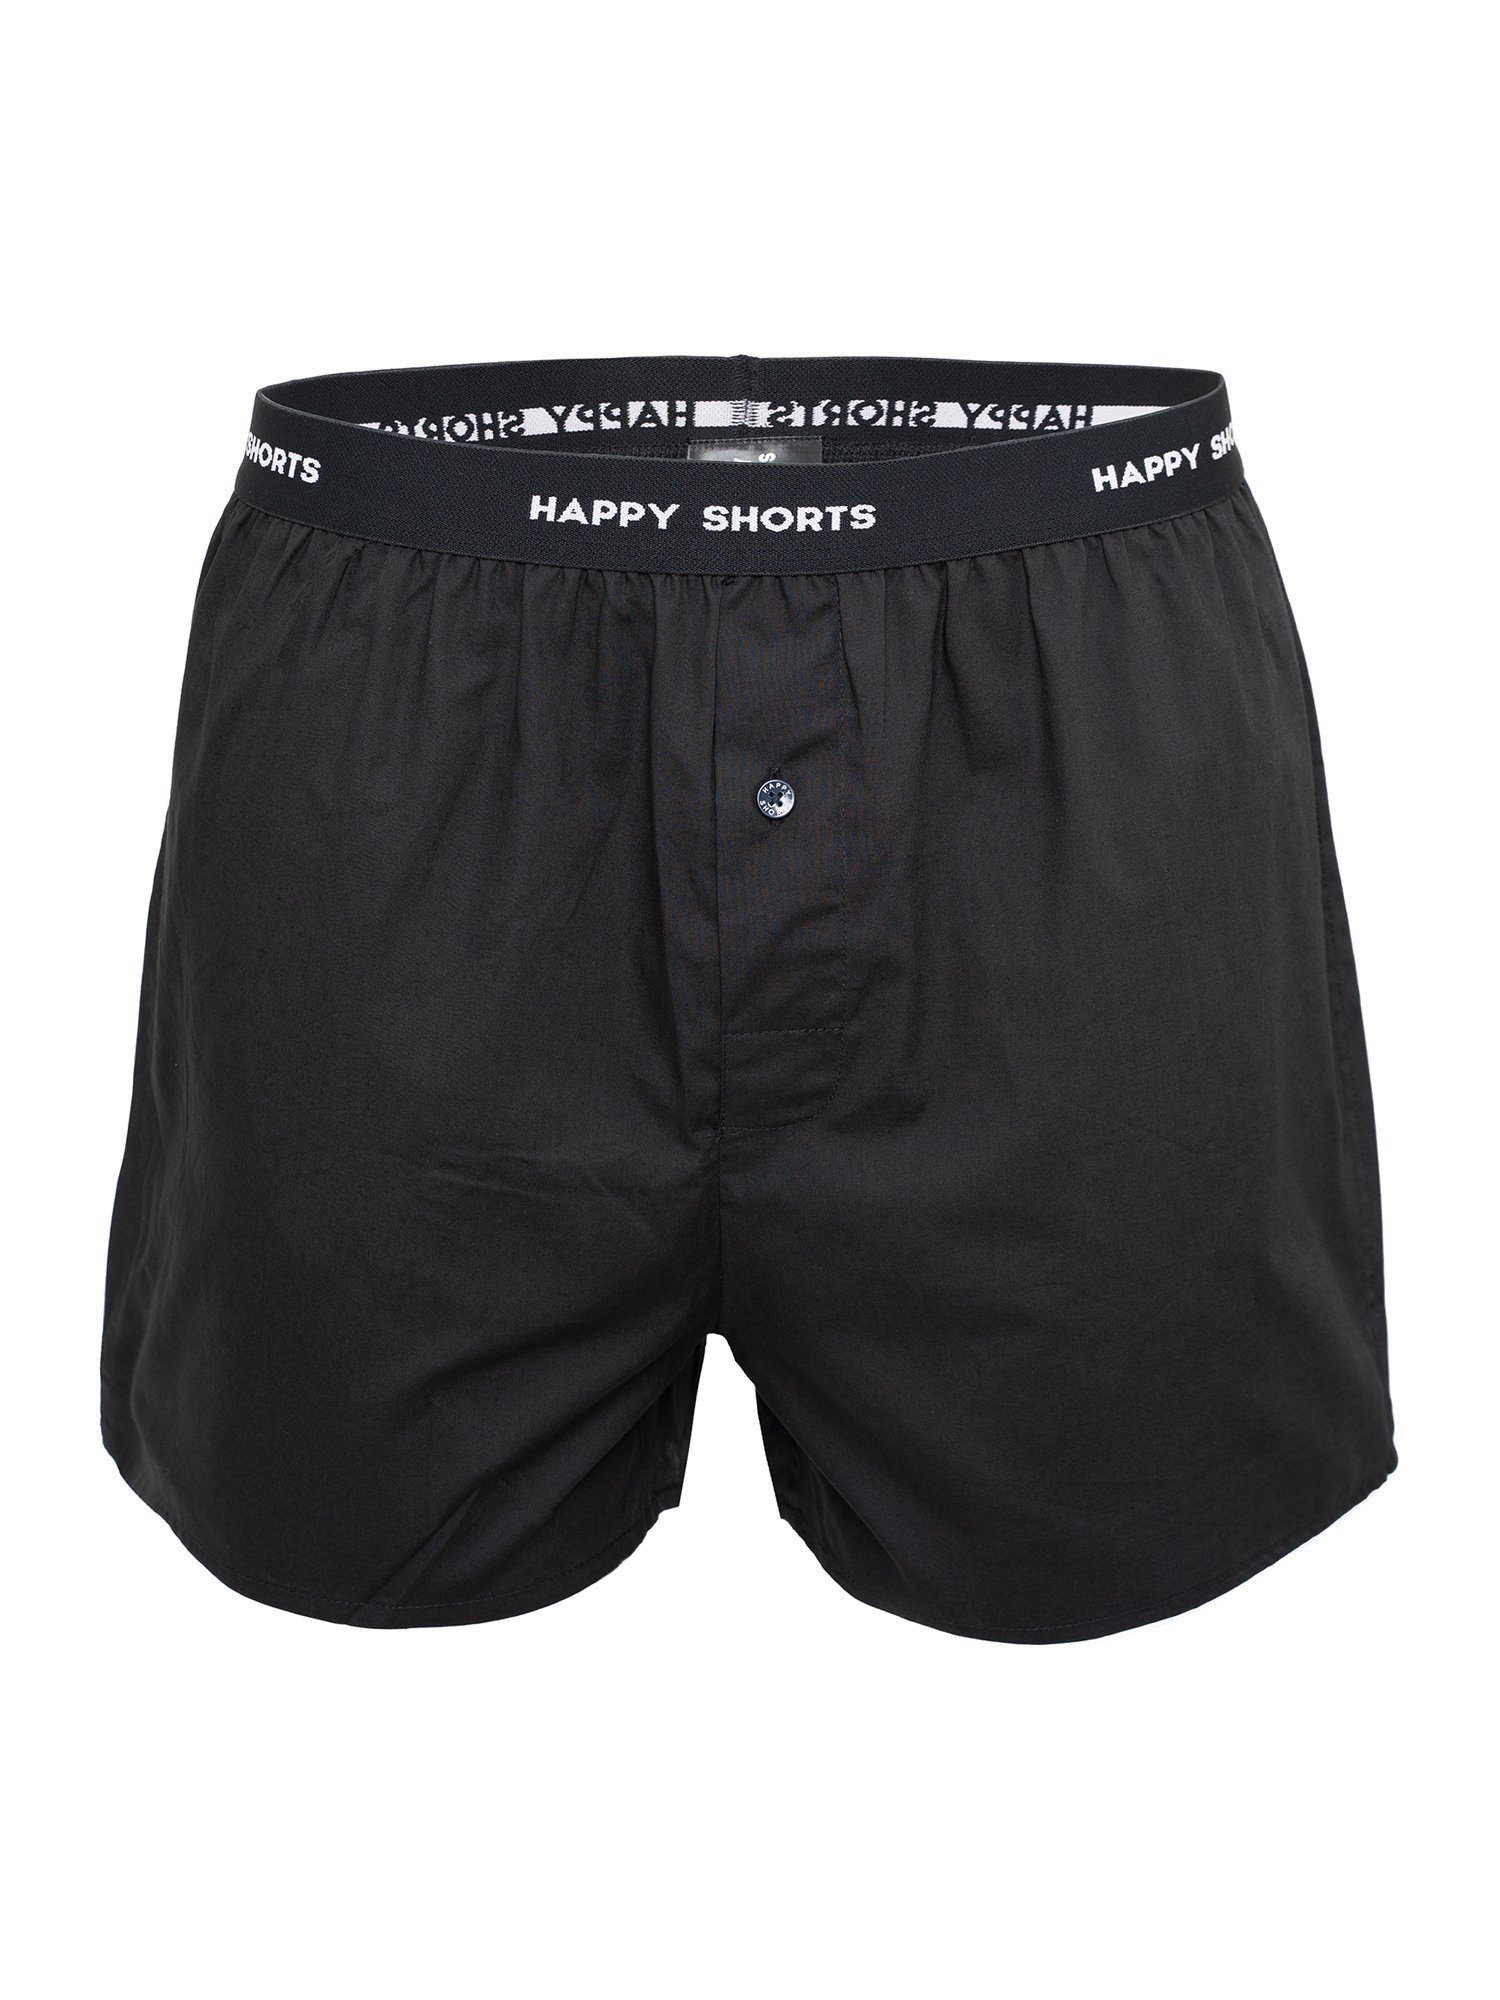 HAPPY SHORTS Boxer Mix Black (6-St) Möwe-Solid